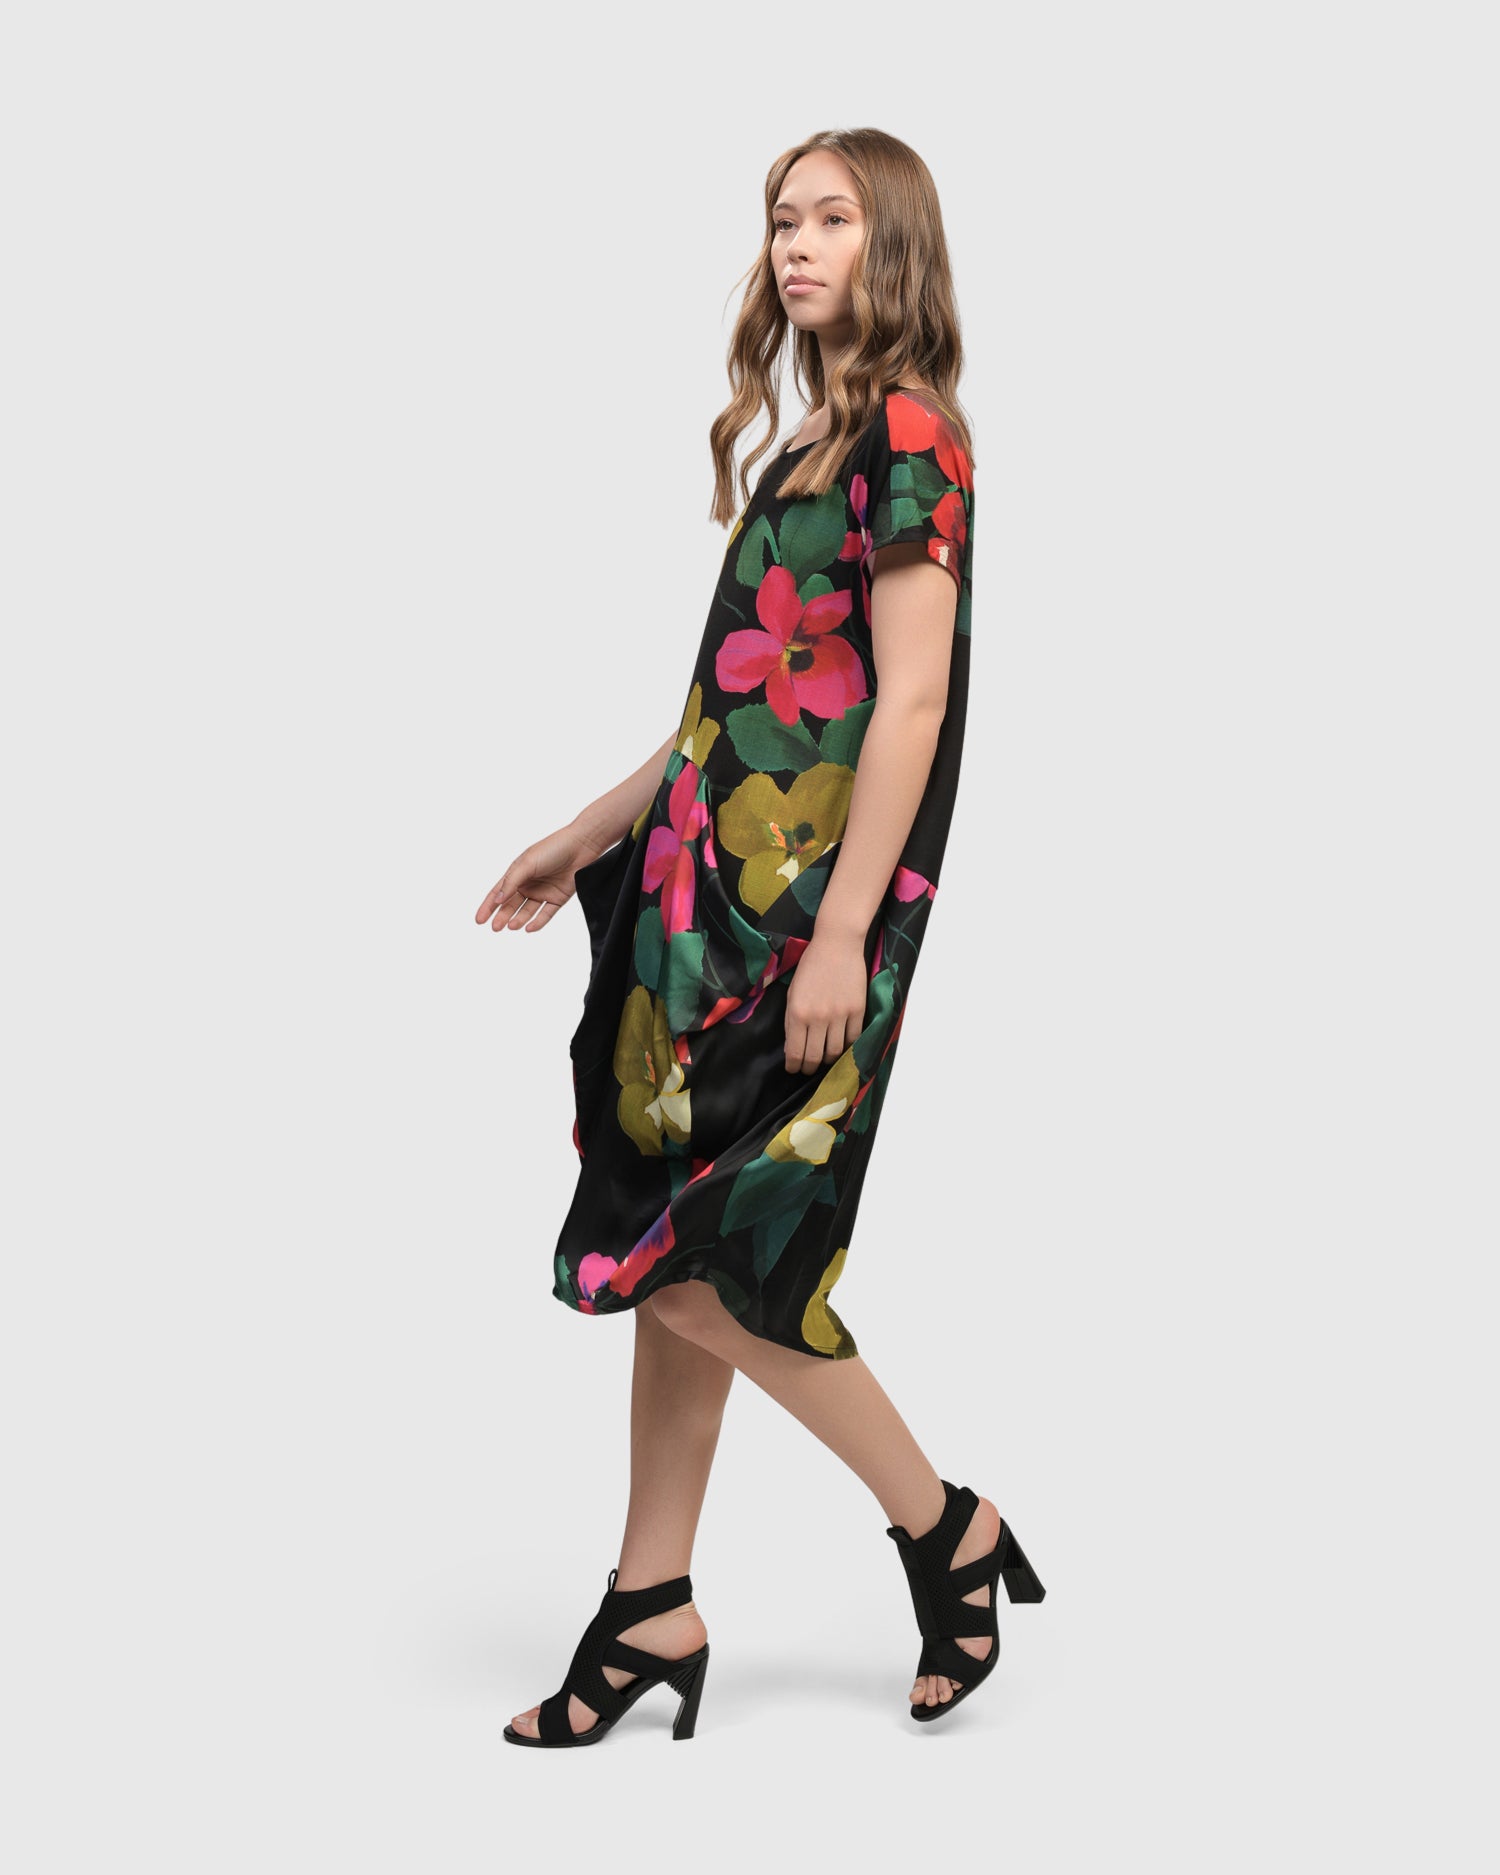 Black Floral Print Dress - SD522G